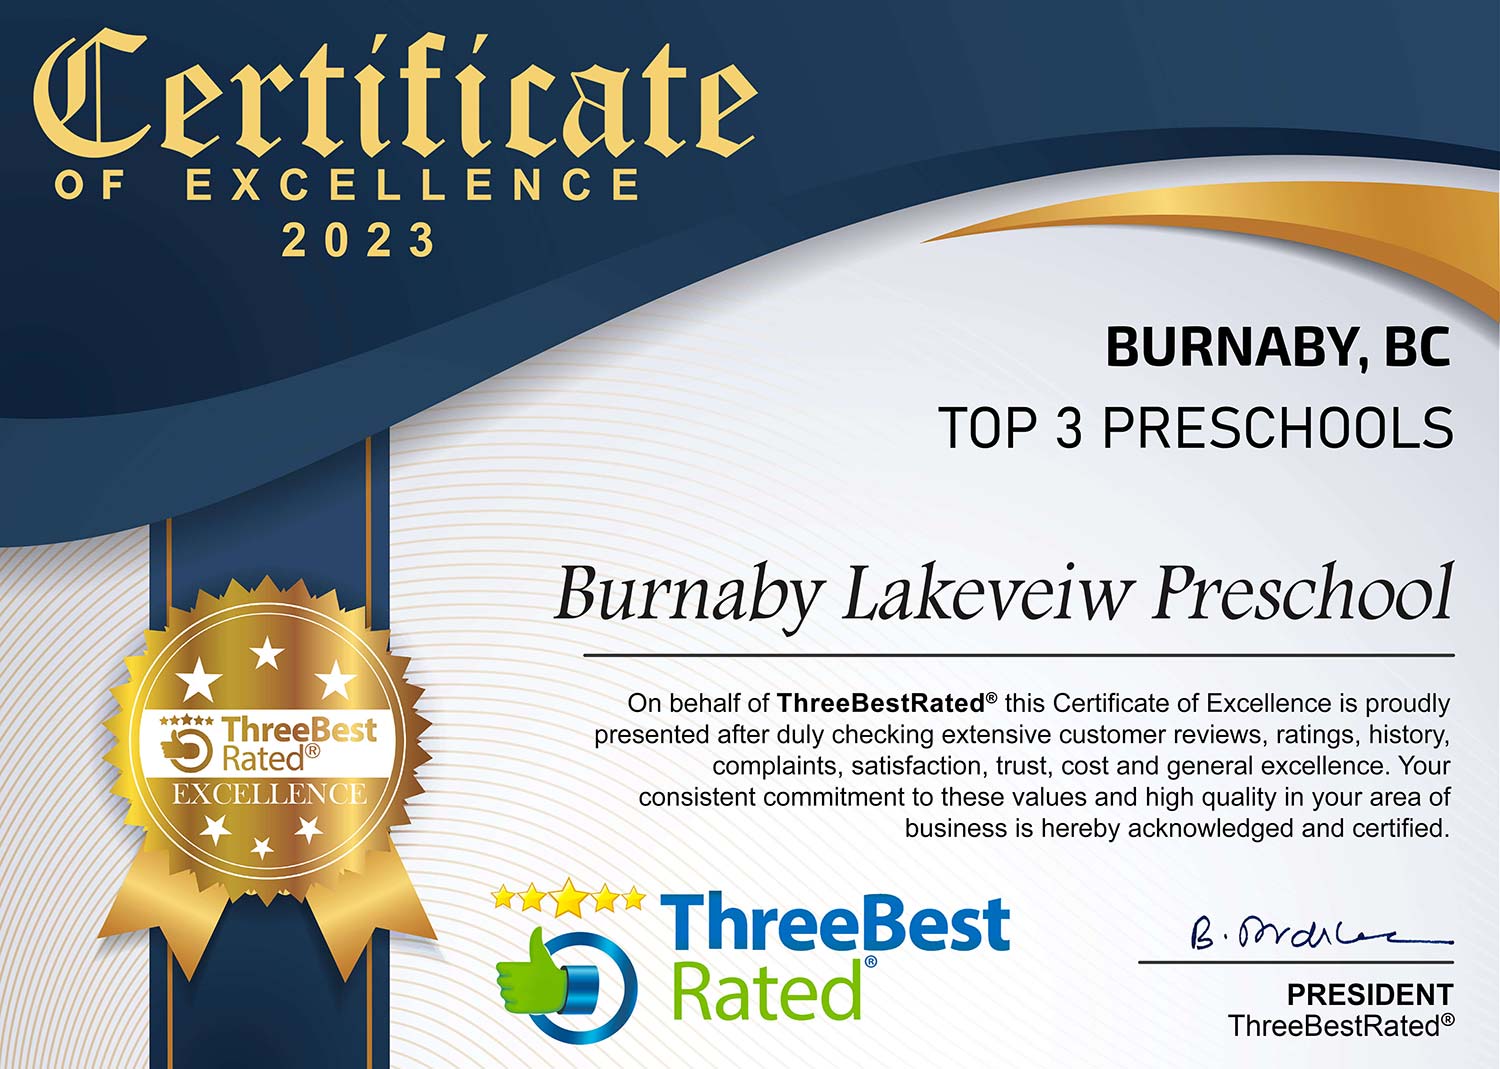 Certificate of Excellence - 2023 Top 3 Preschools in Burnaby